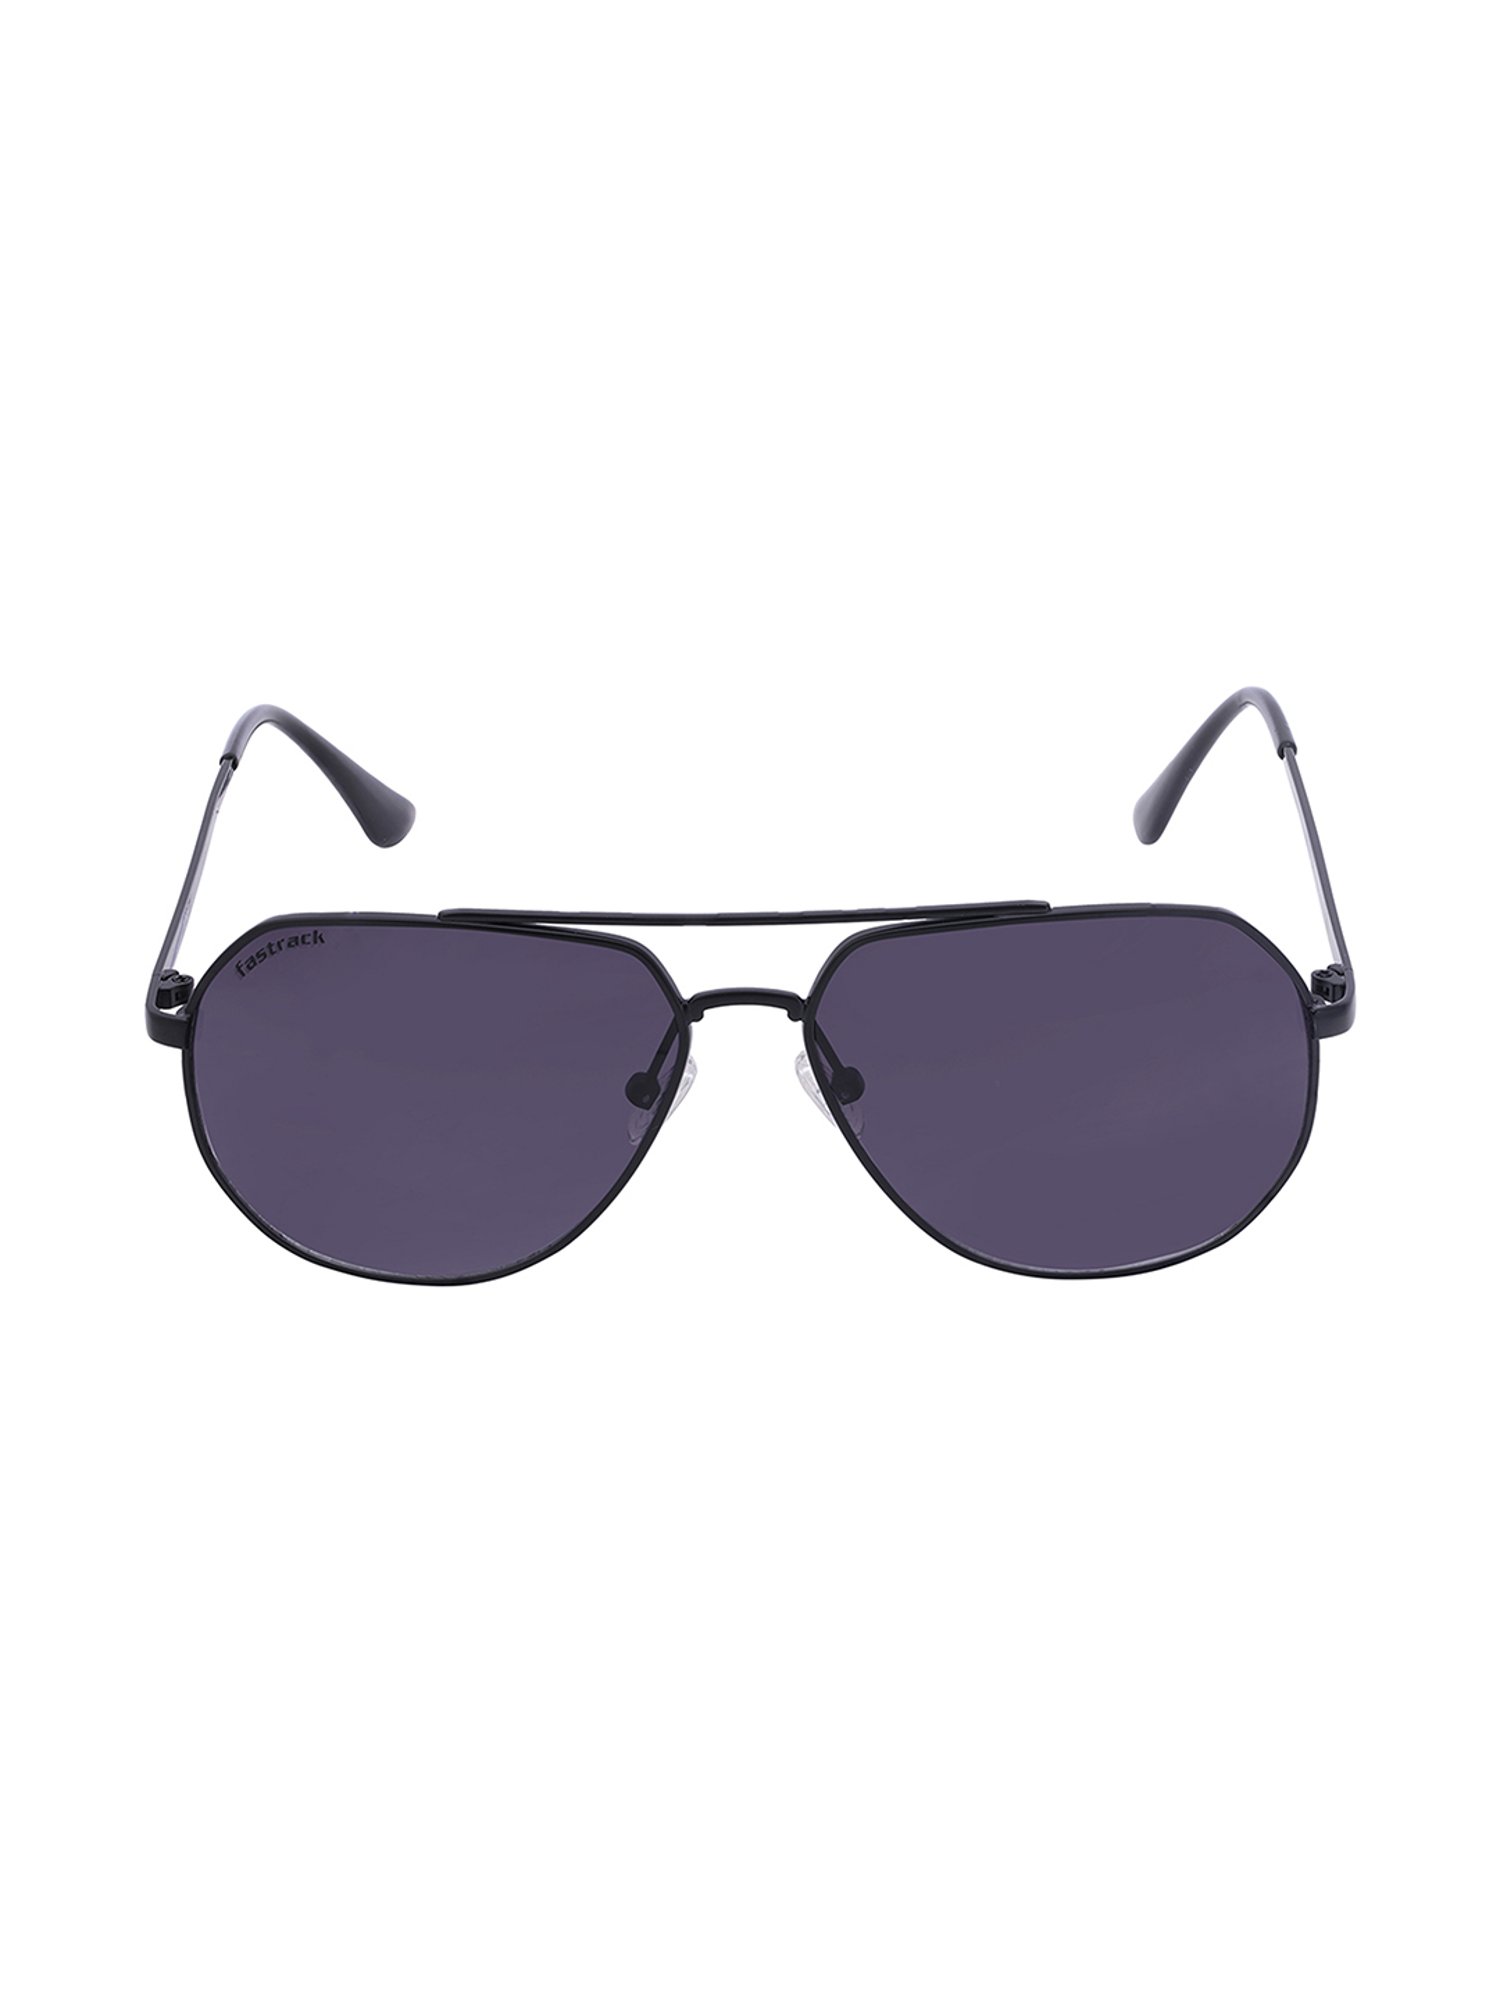 Fastrack Aviator unisex Sunglasses Brown Frame M083BR2F – SoftTouchLenses